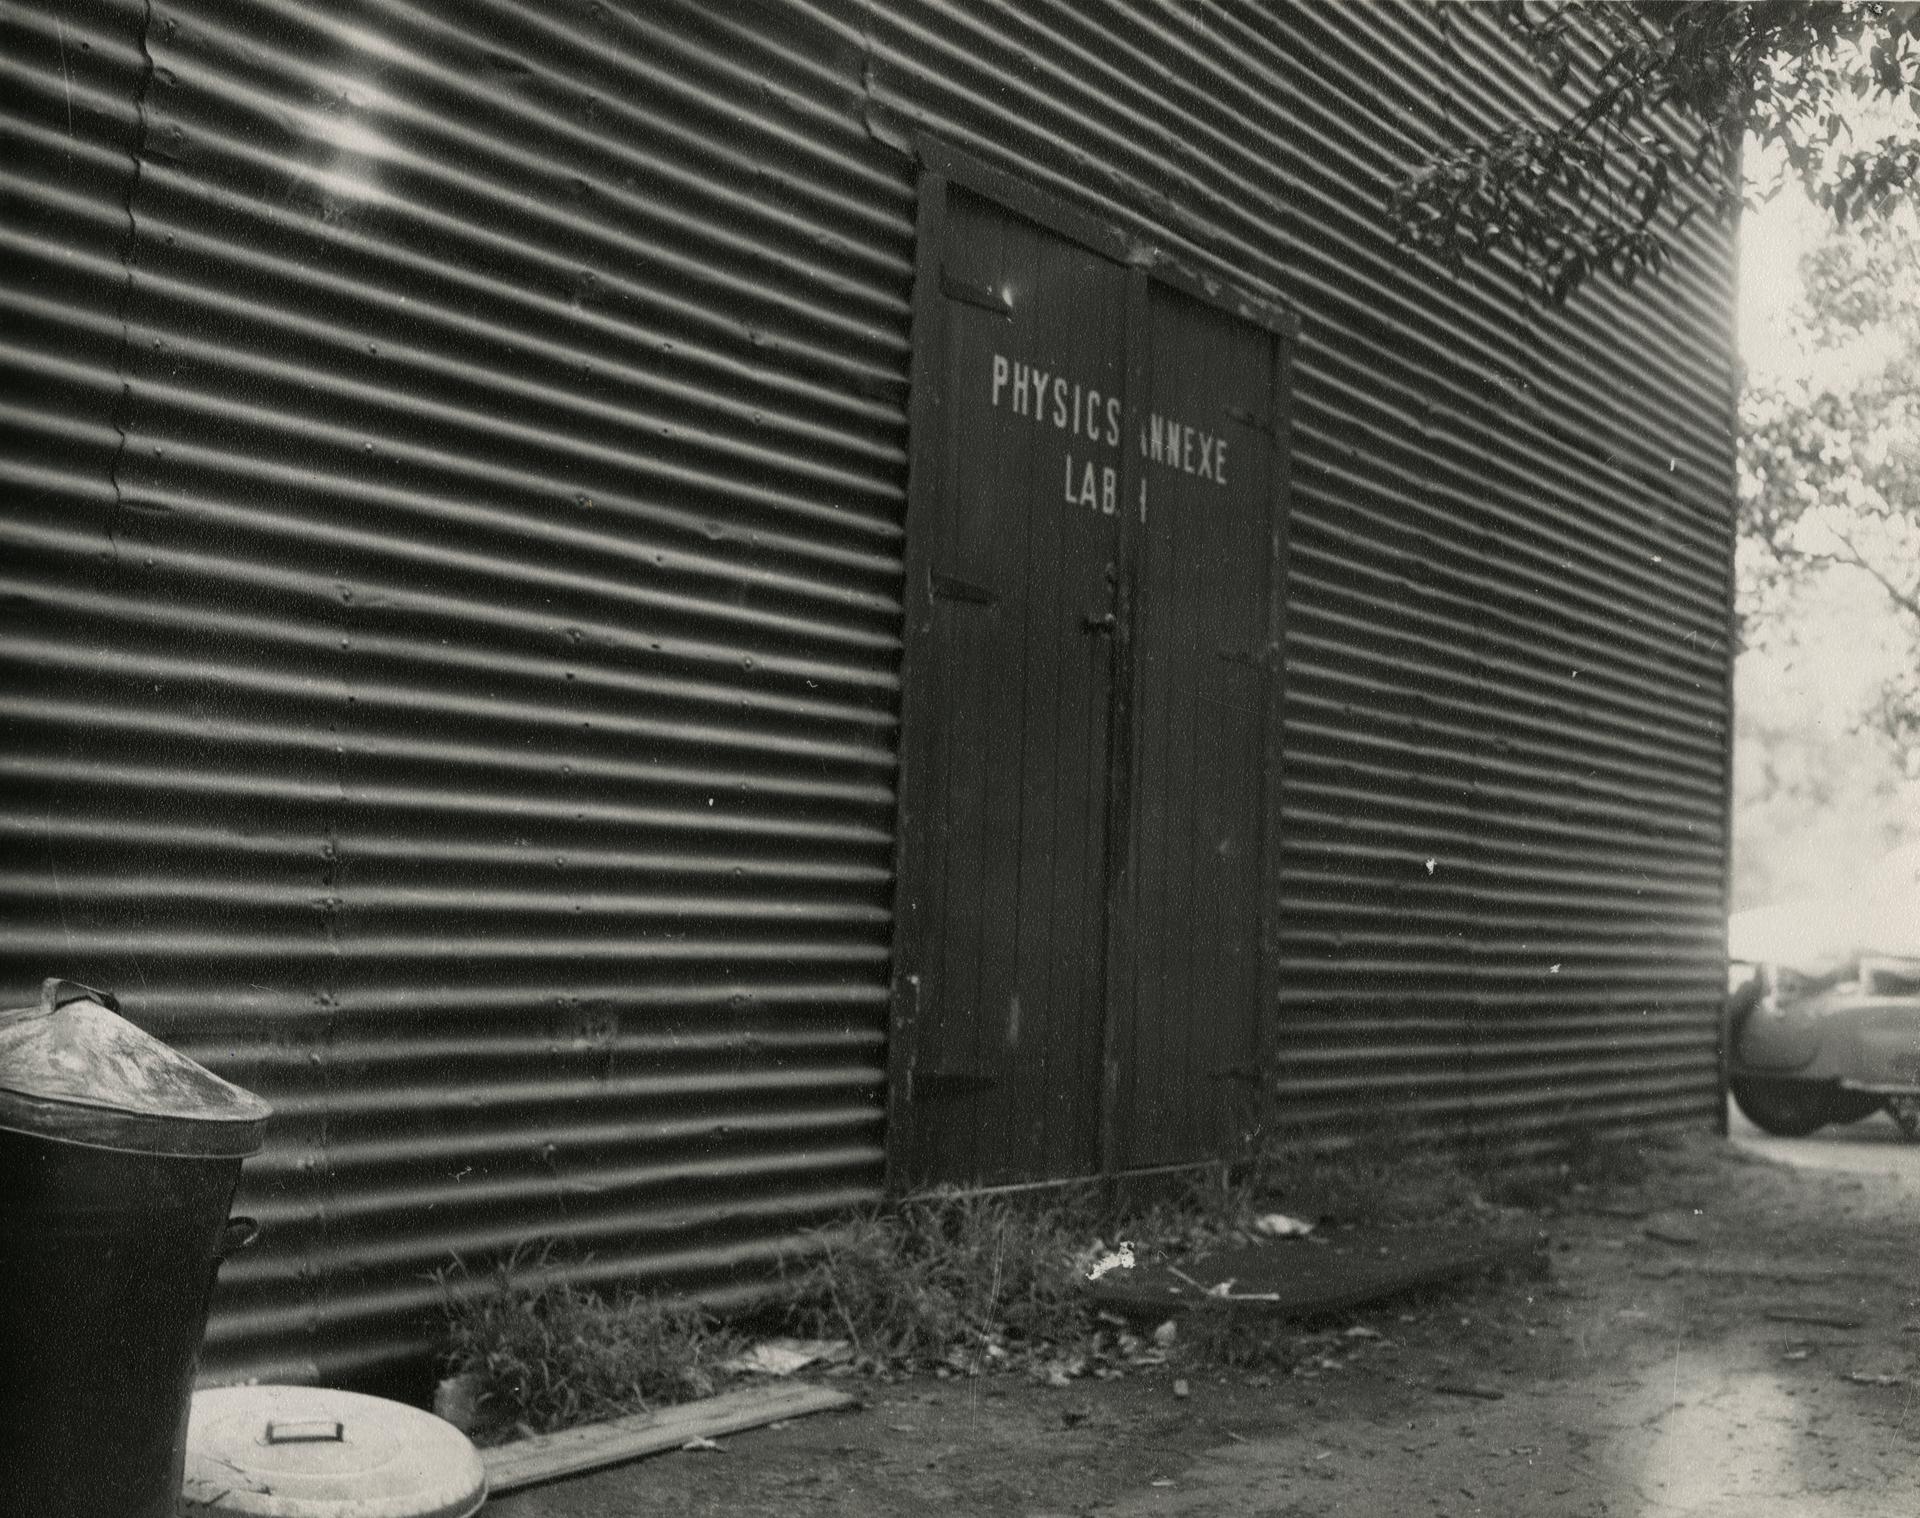 Corrugated iron shed housing Physics Annexe laboratory, 1958